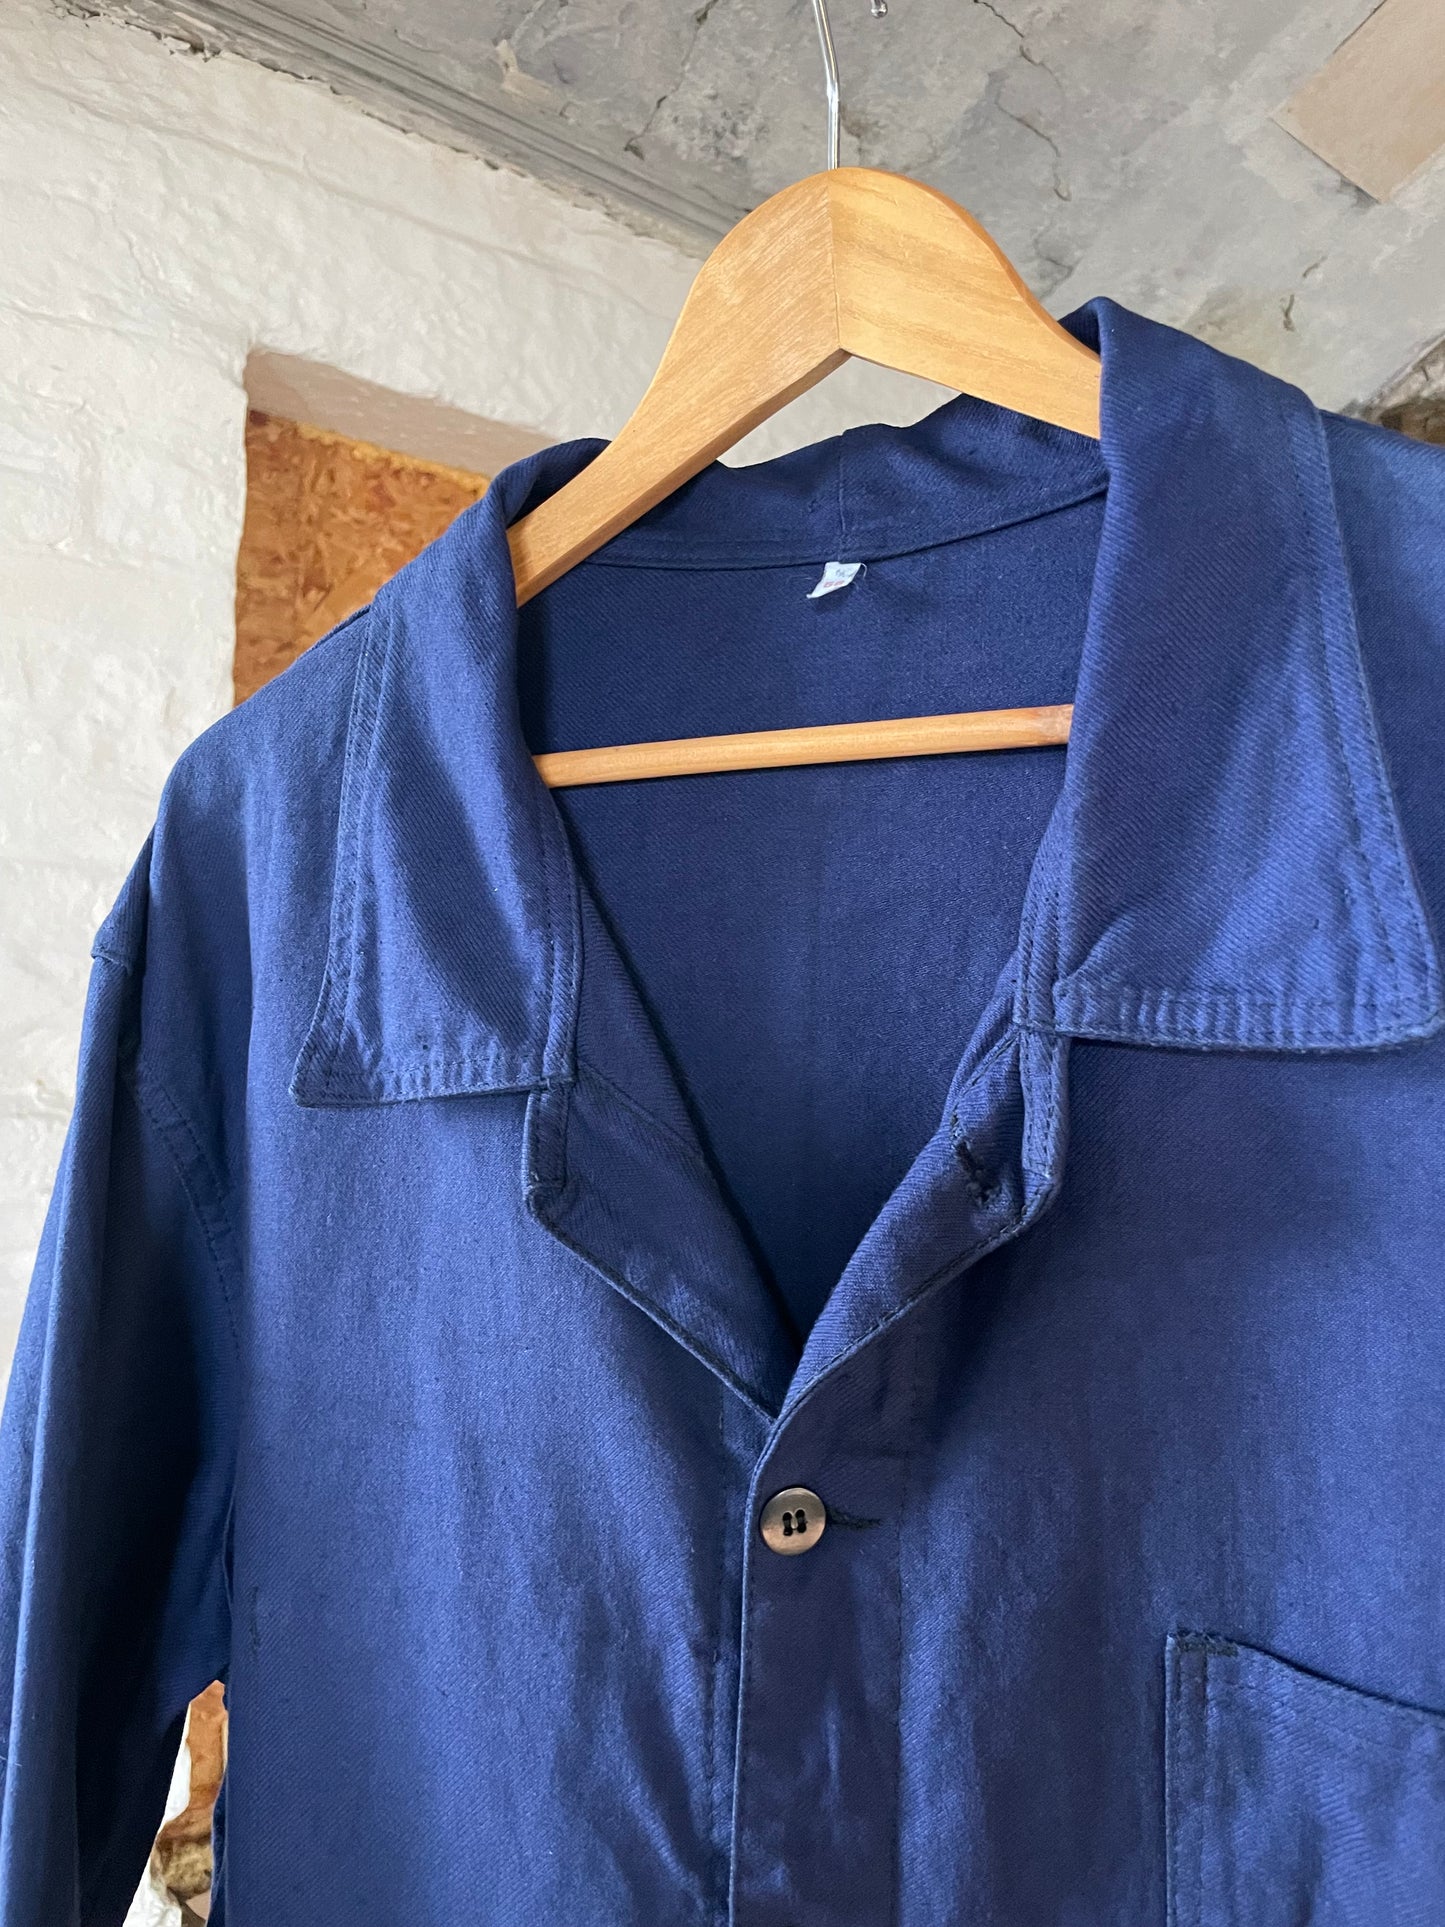 70s French cotton chore shirt (XL)